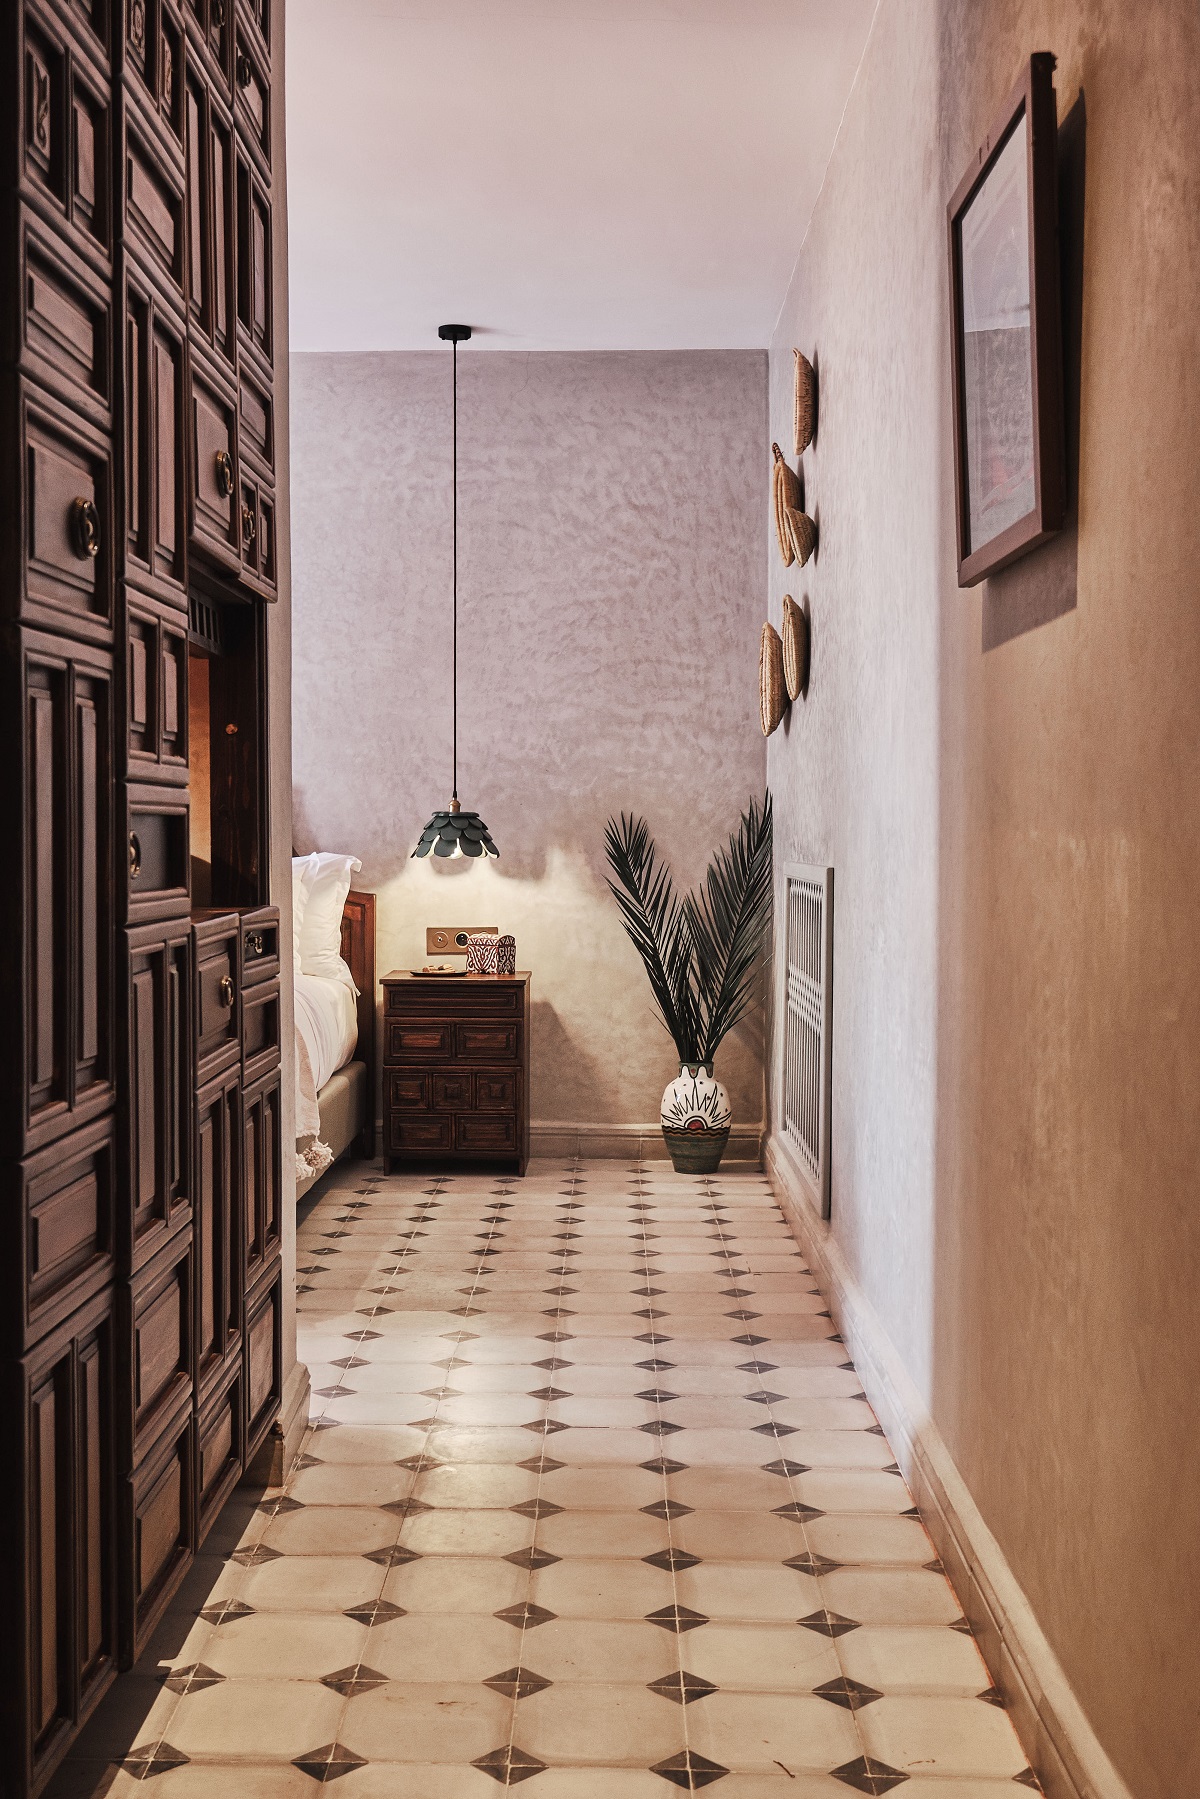 wooden moroccan door leading into guestroom with tiles pattern on the floor